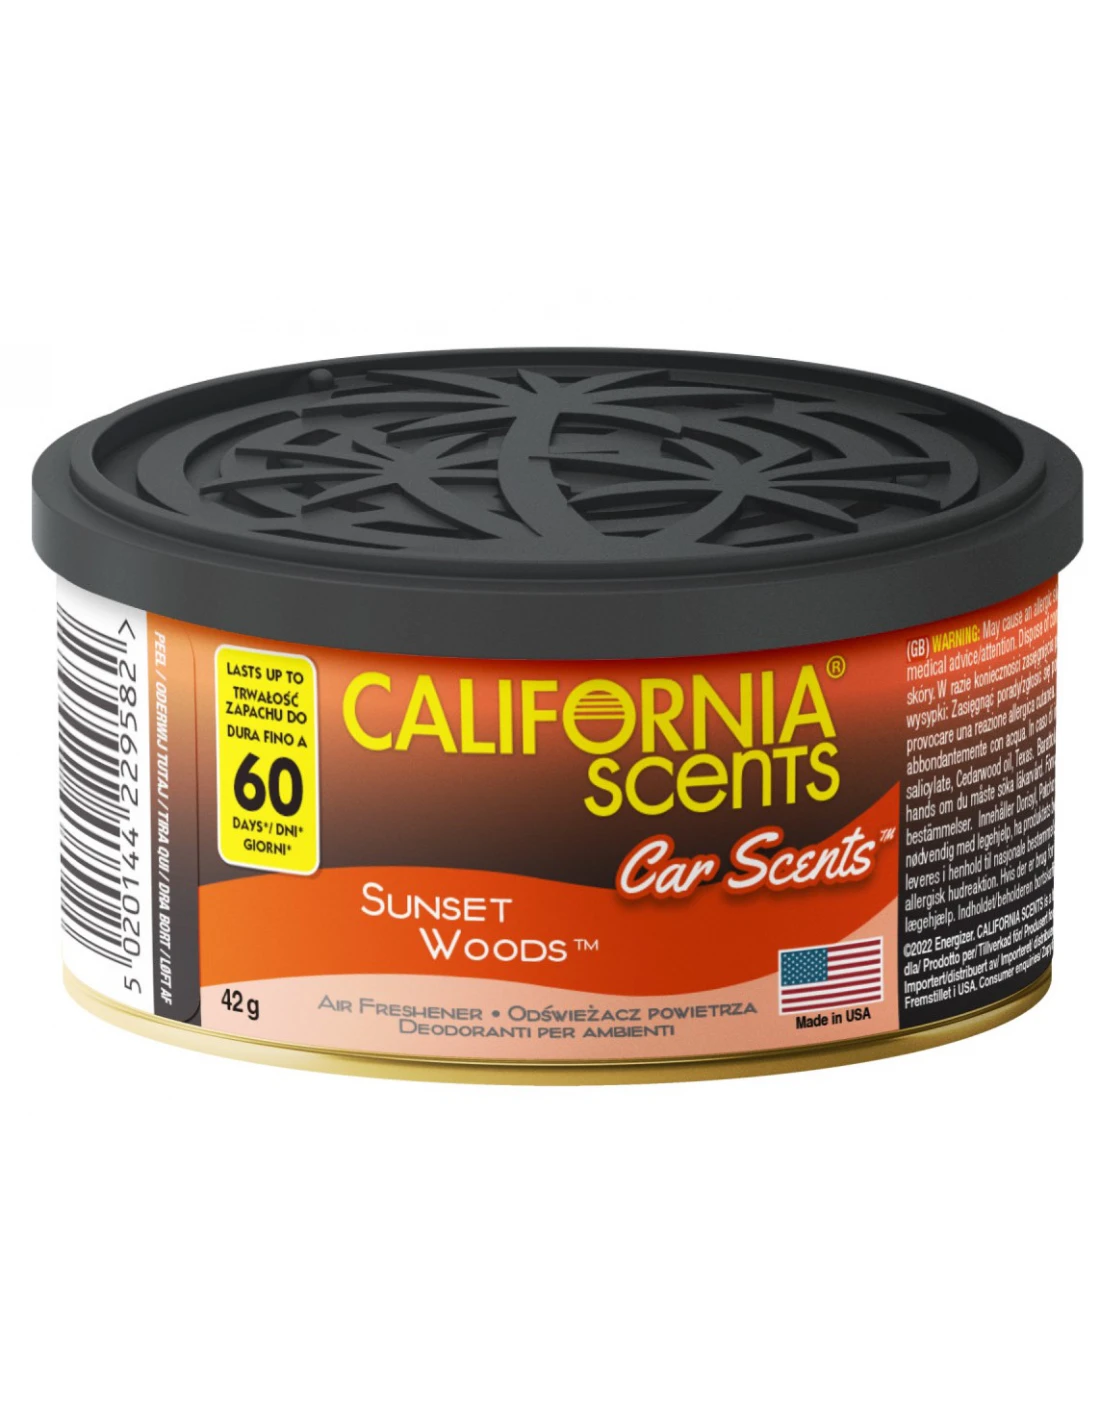 Wholesale California Scents Car Air Fresheners